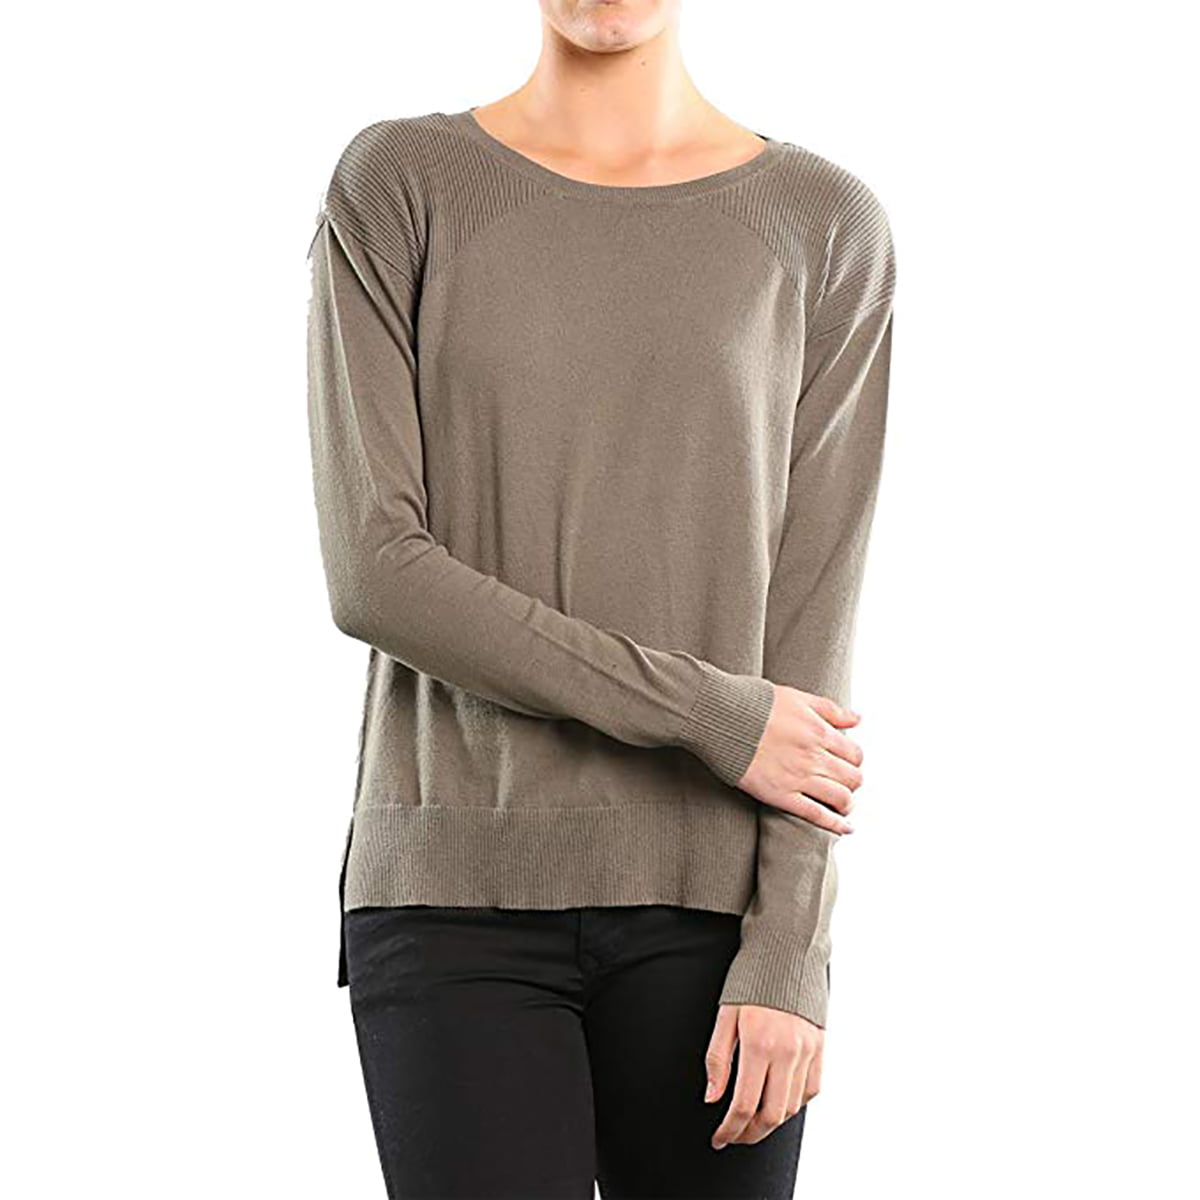 Rusty Women's Blank Shirts - Walmart.com